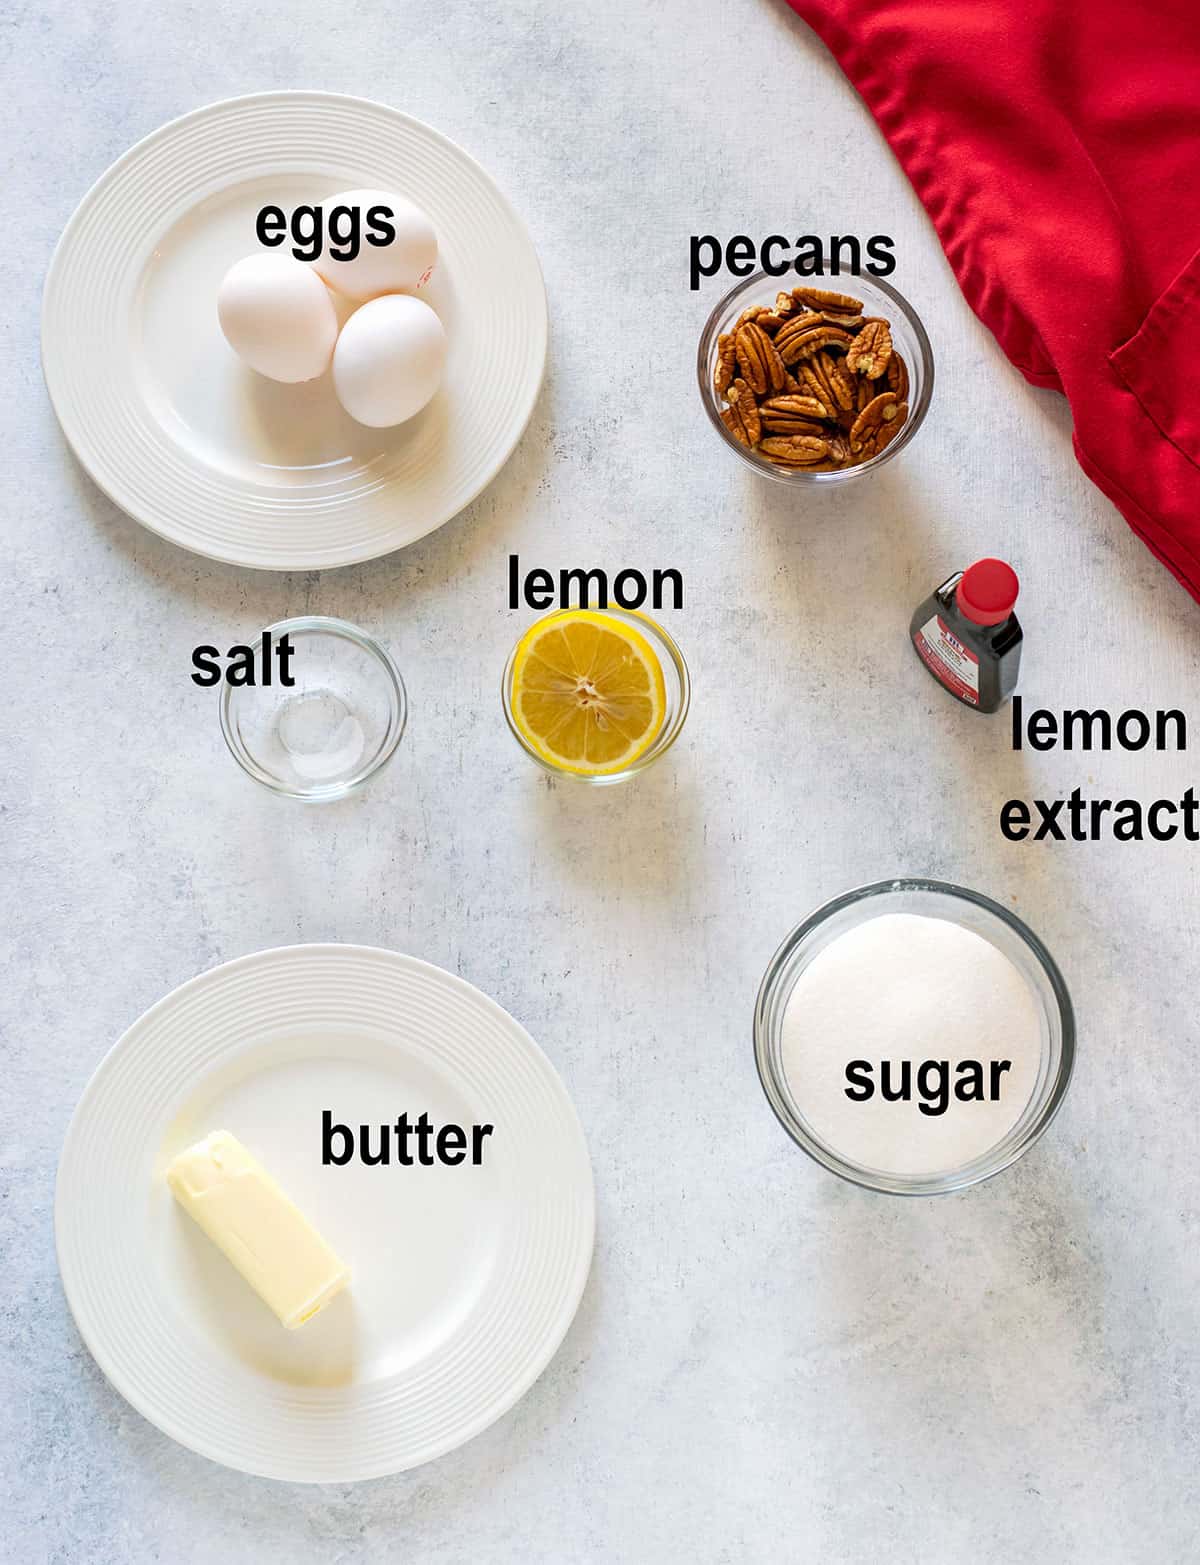 eggs, butter, pecans, lemon, salt, sugar, extract